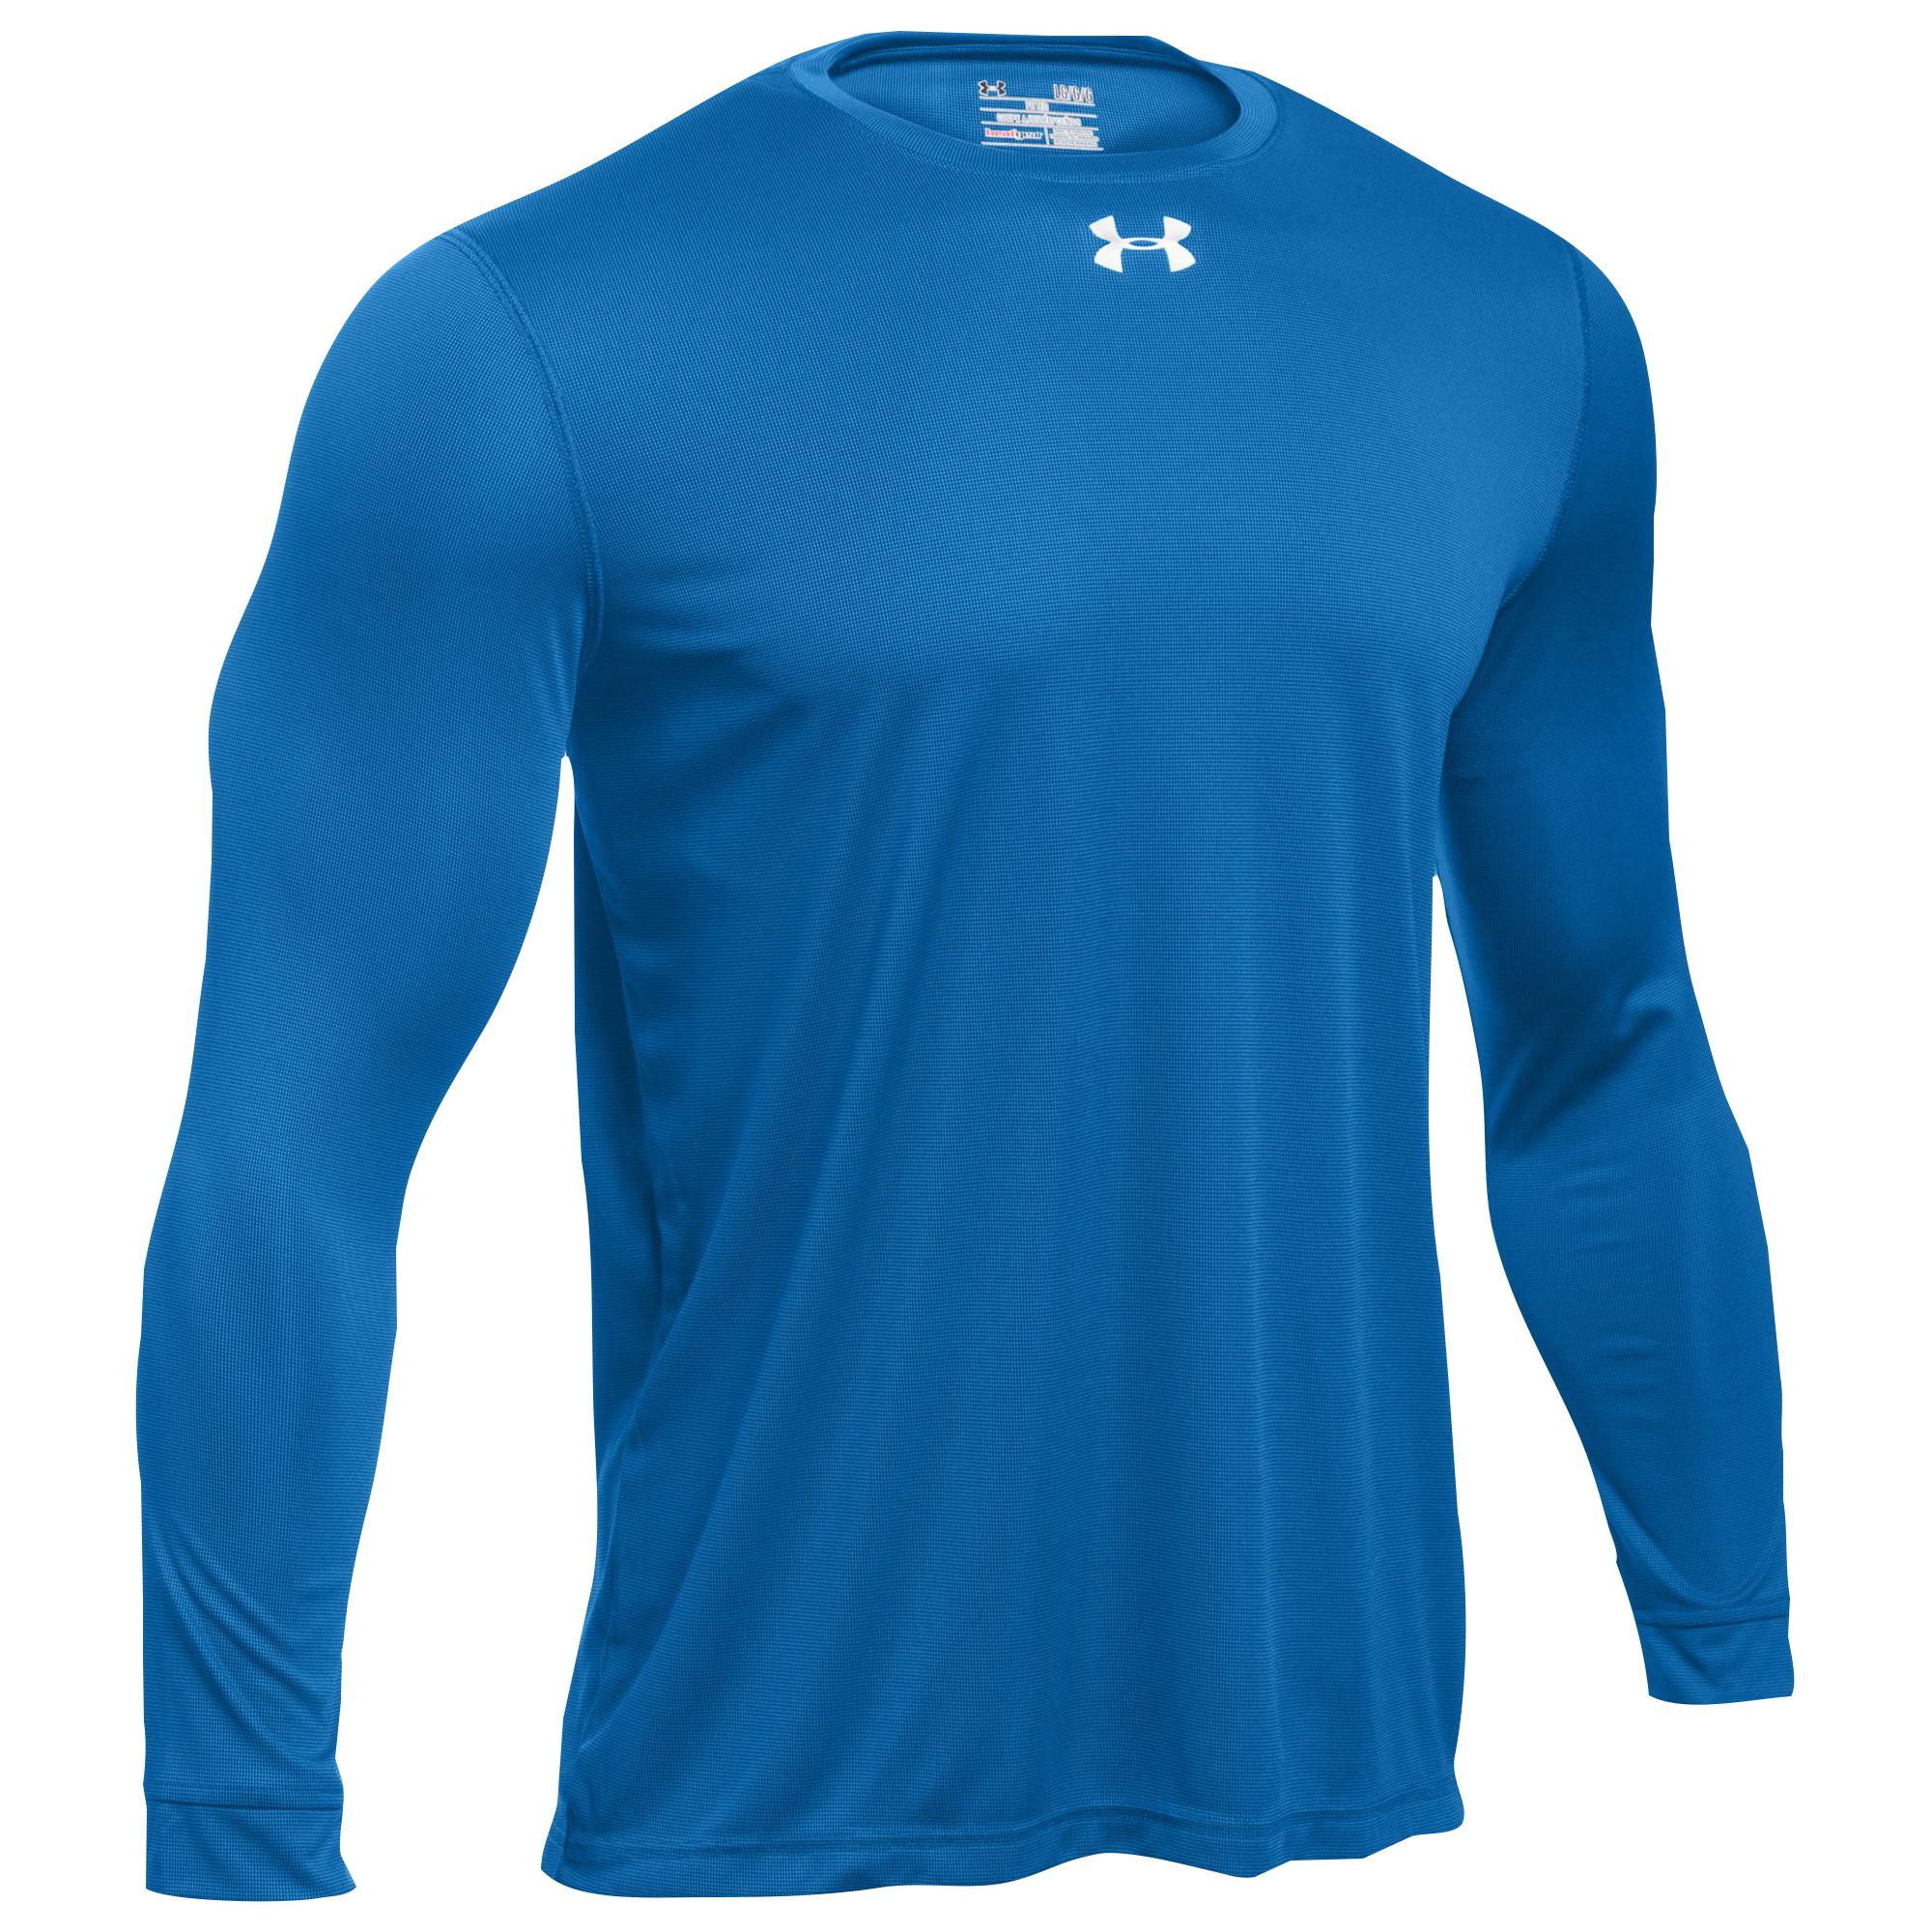 Under Armour Team Locker 2.0 Long Sleeve T-shirt in Blue for Men - Lyst